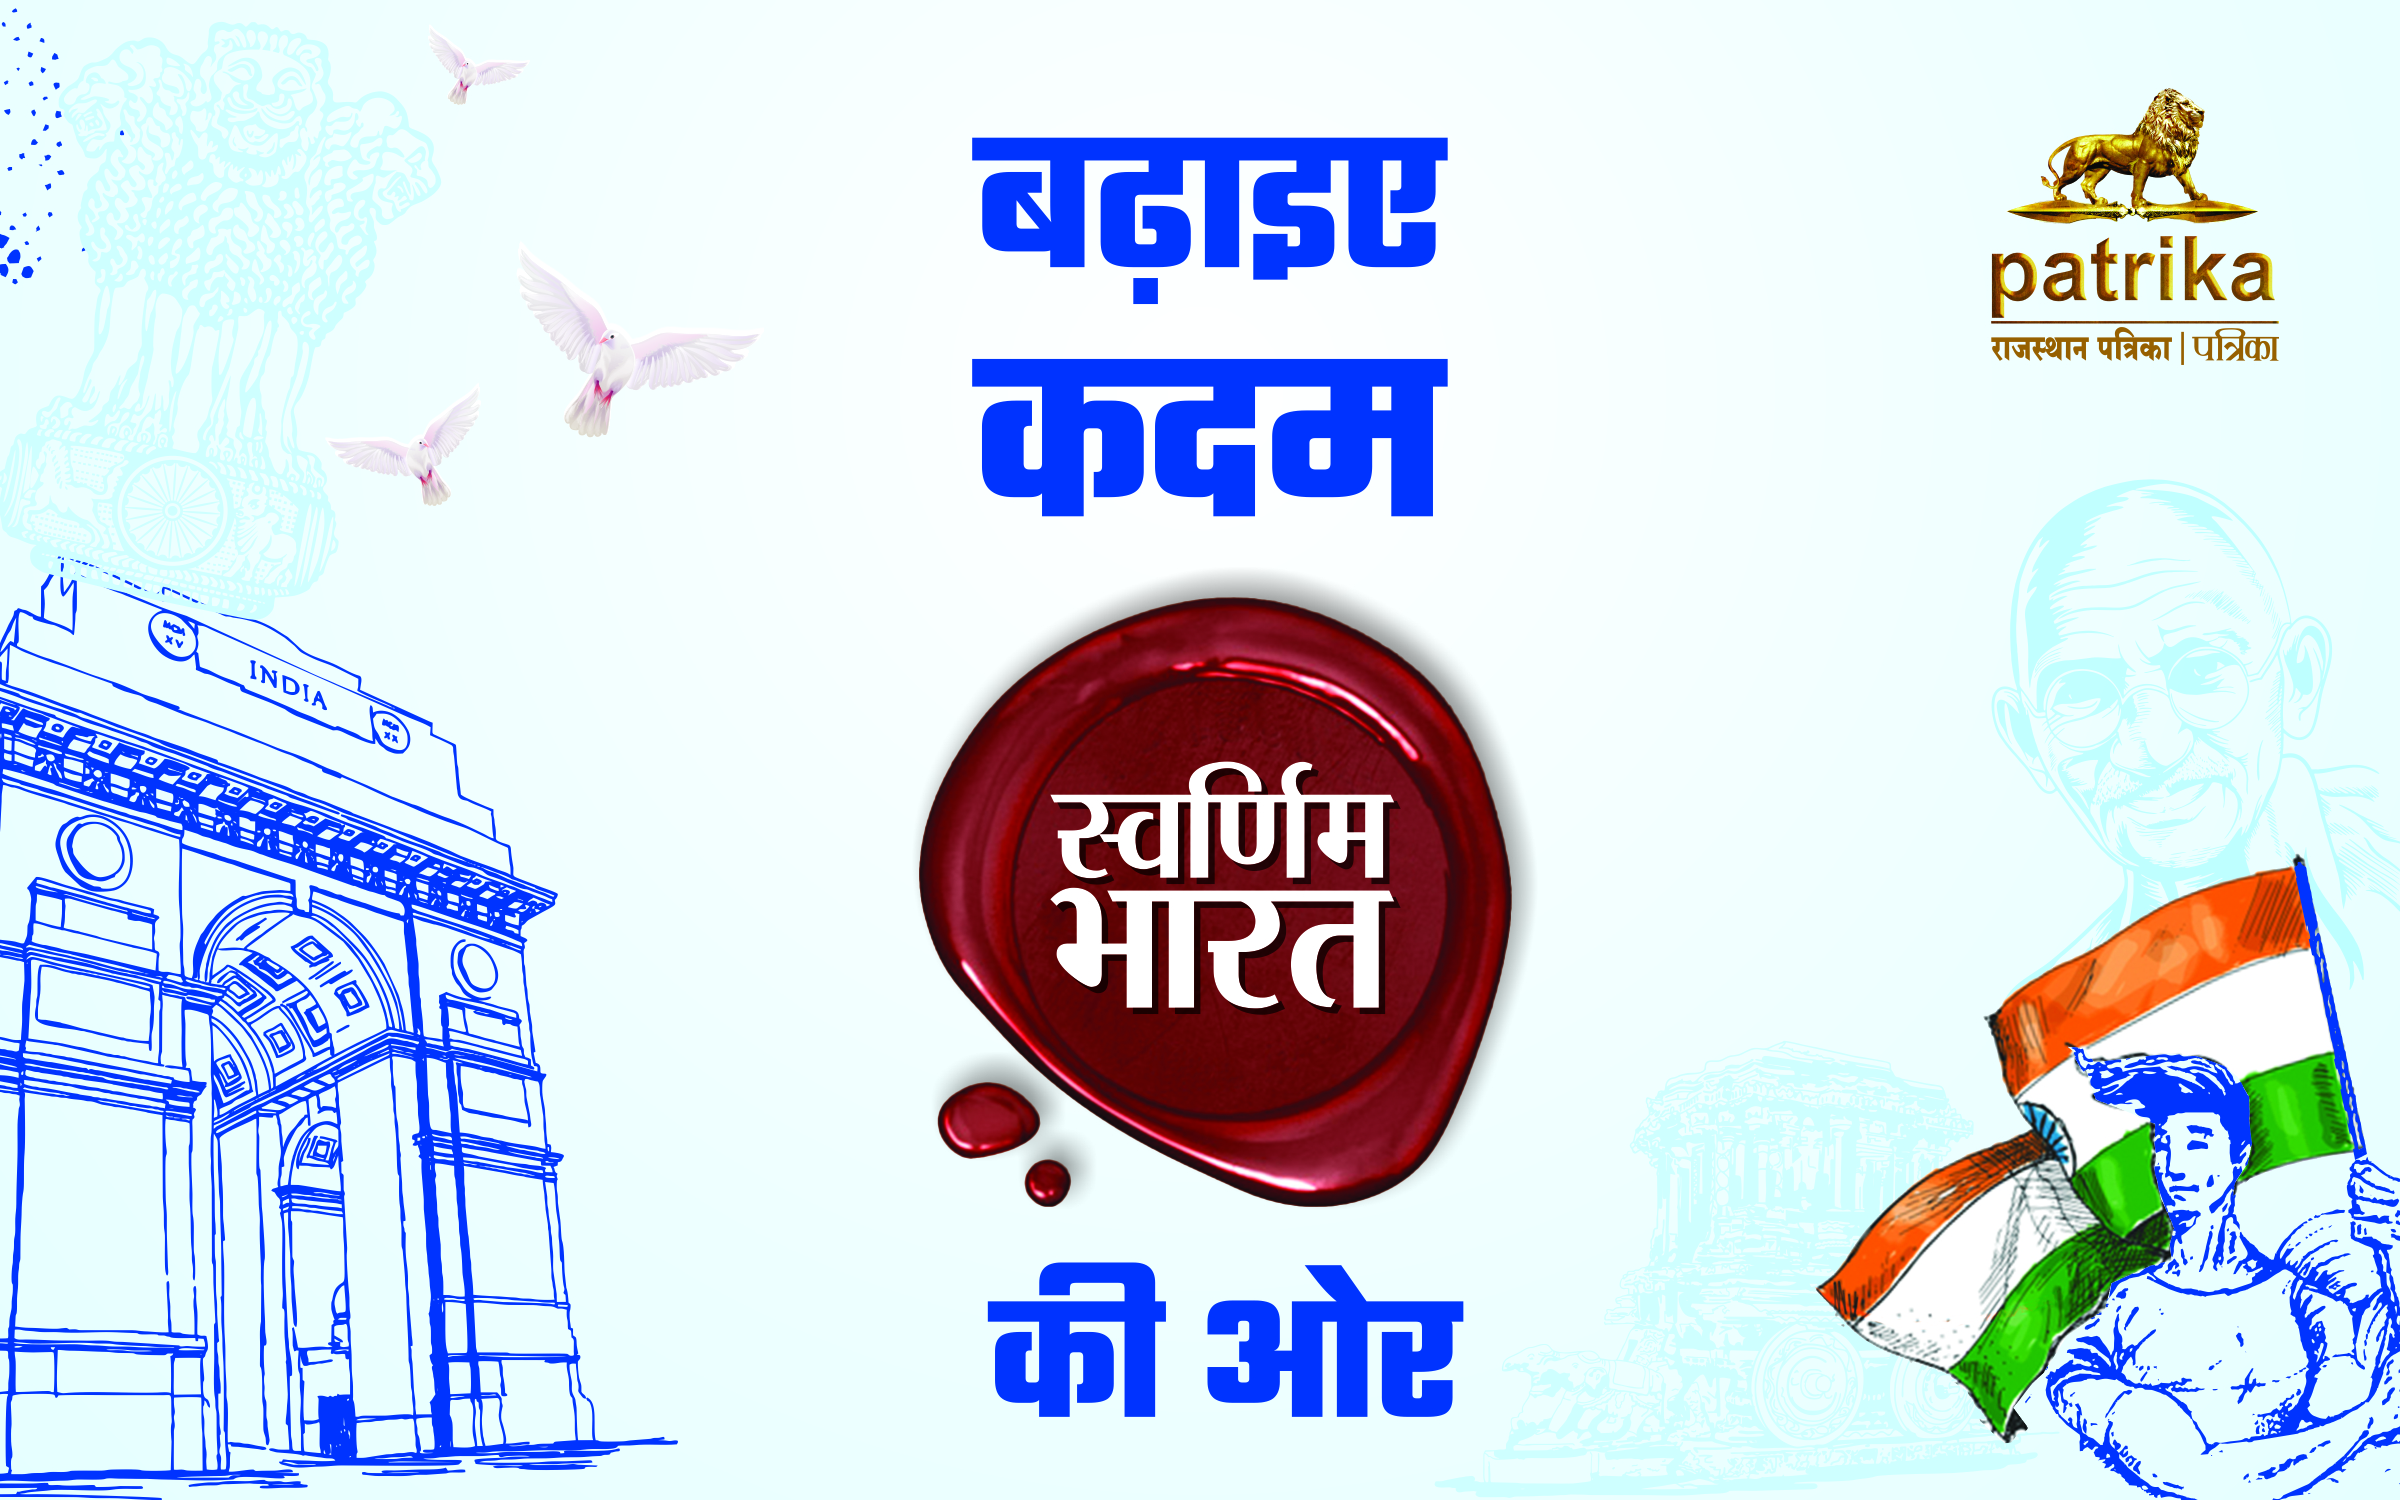 Swarnim Bharat campaign